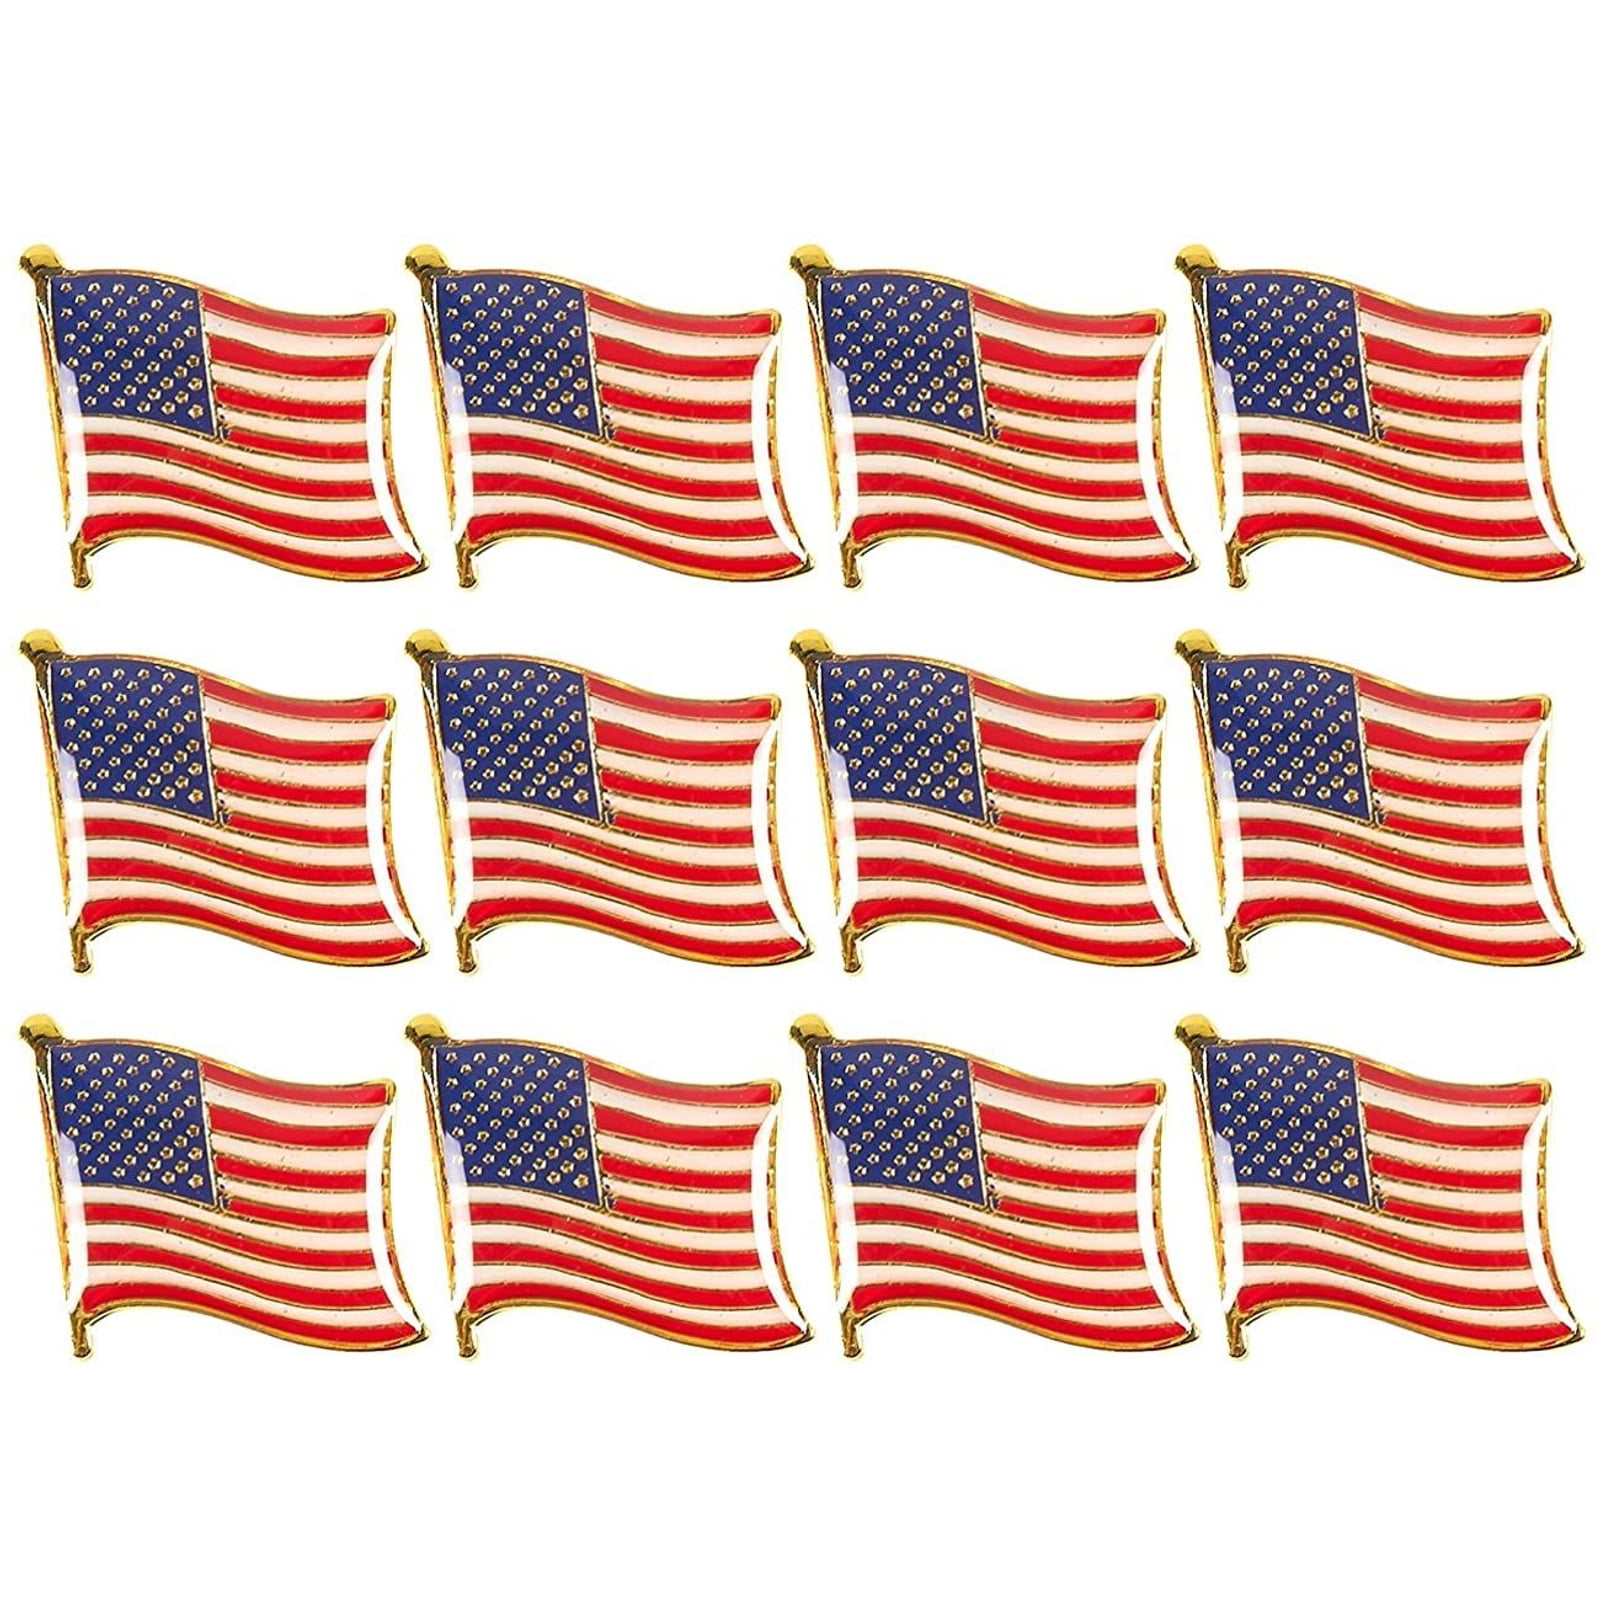 American Flag Lapel Pins USA Lapel Pins US Flag Pins USA Badge Pin Suit Jacket Lapel Pin for Patriotic Display,25 Pack